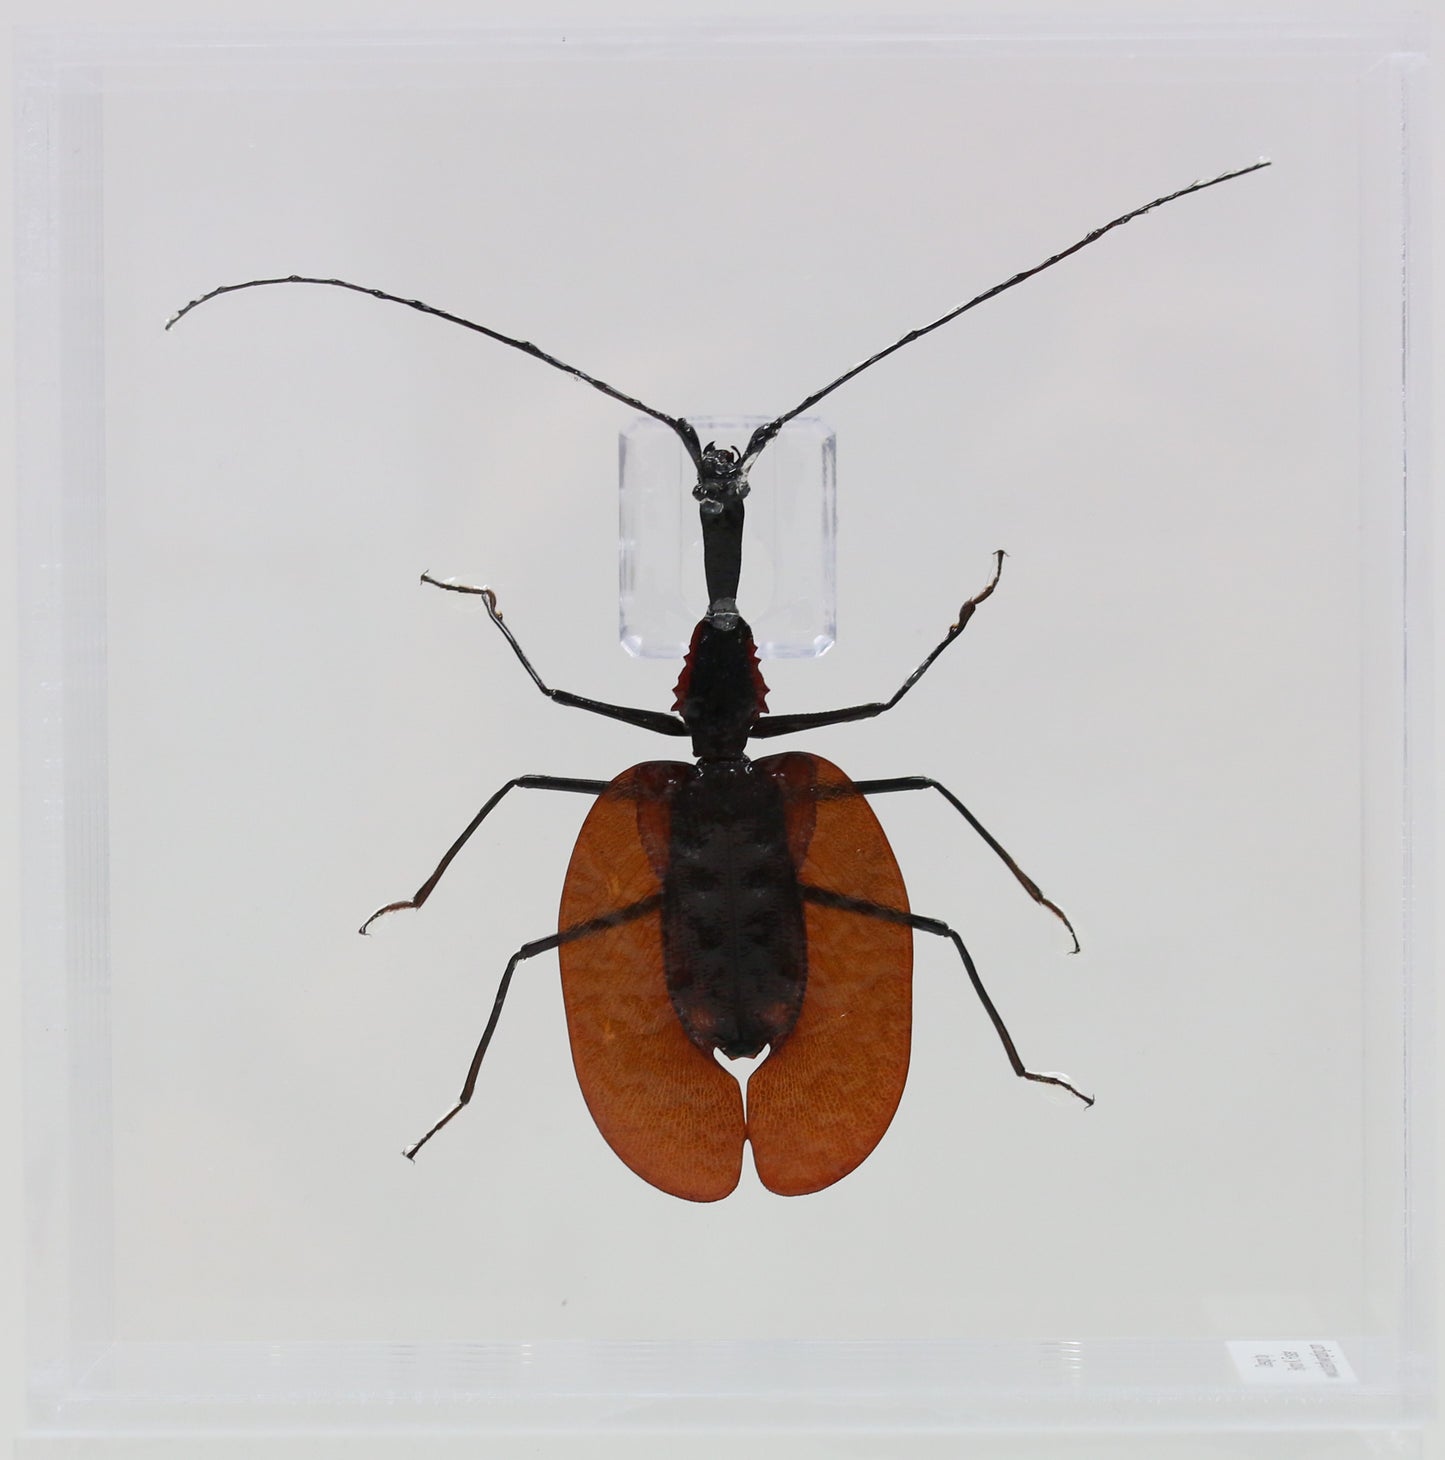 9060708 - Real Bug Acrylic Display Box - 6" X 6" - Violin Beetle (Mormolyce phyllodes)